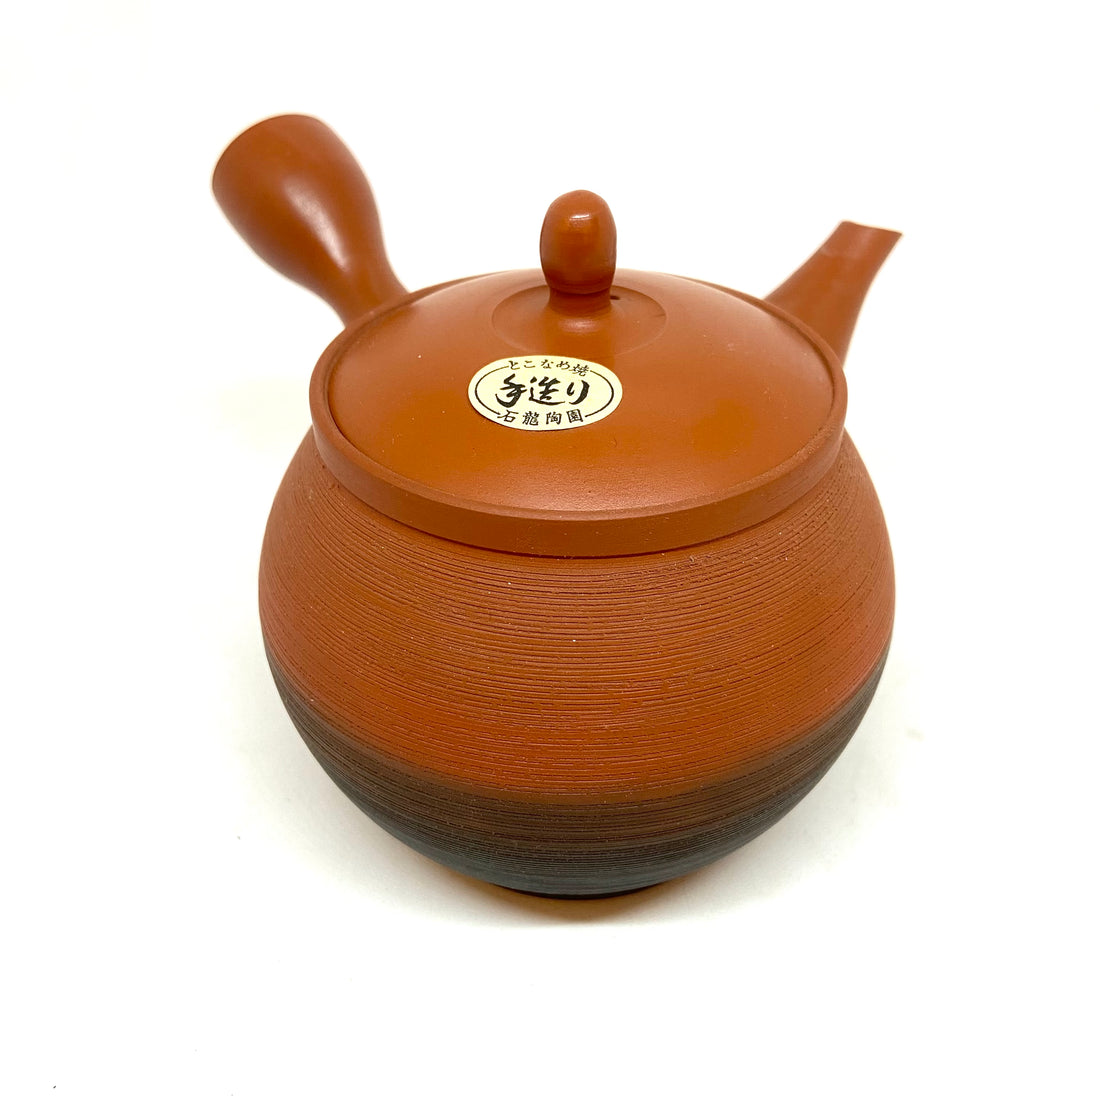 Kyusu Japanese Teapot - Yohen Sekiryu - 290ml  - #6